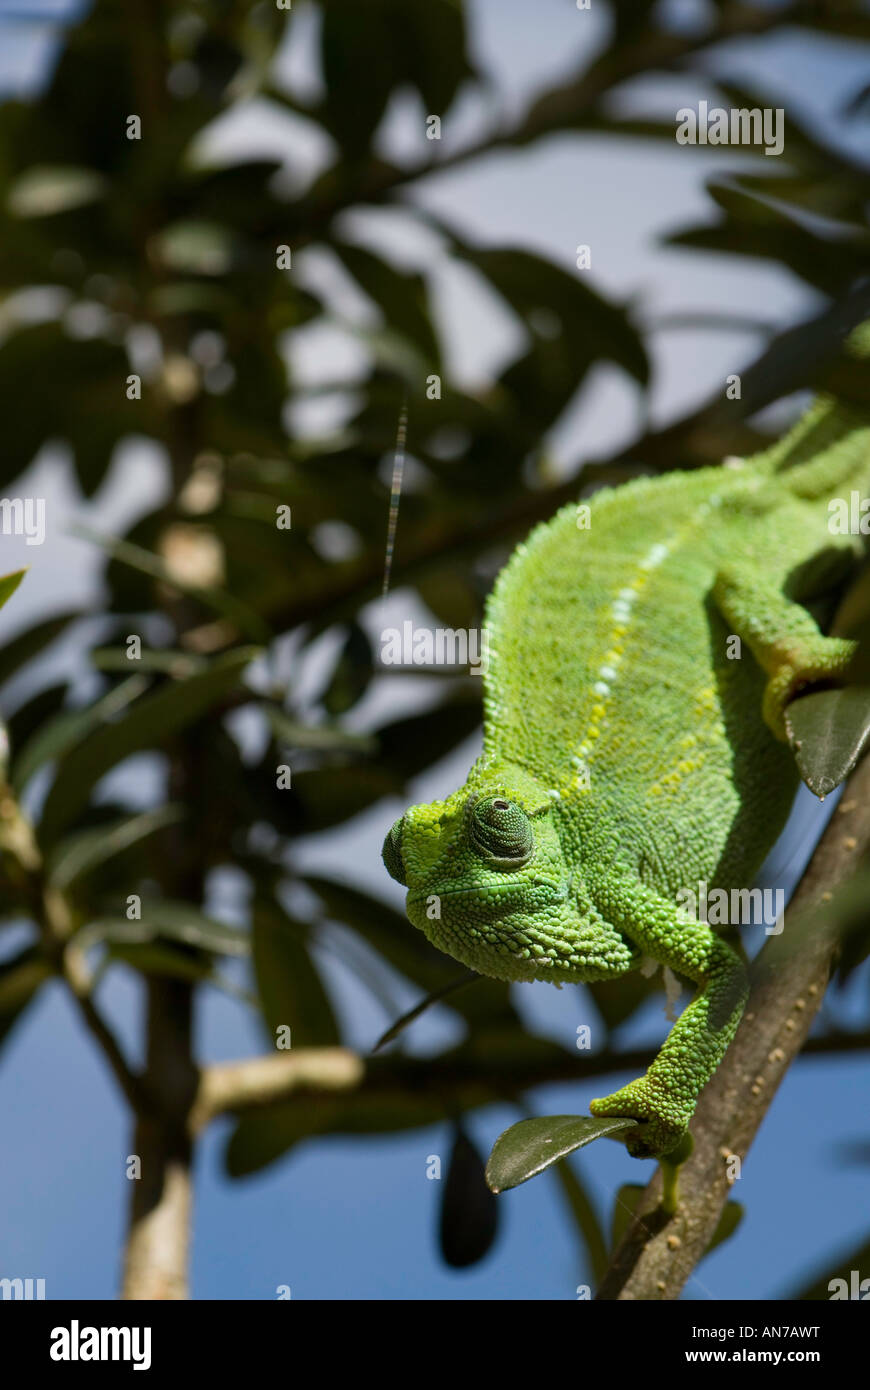 Green chameleon on tree branch Stock Photo